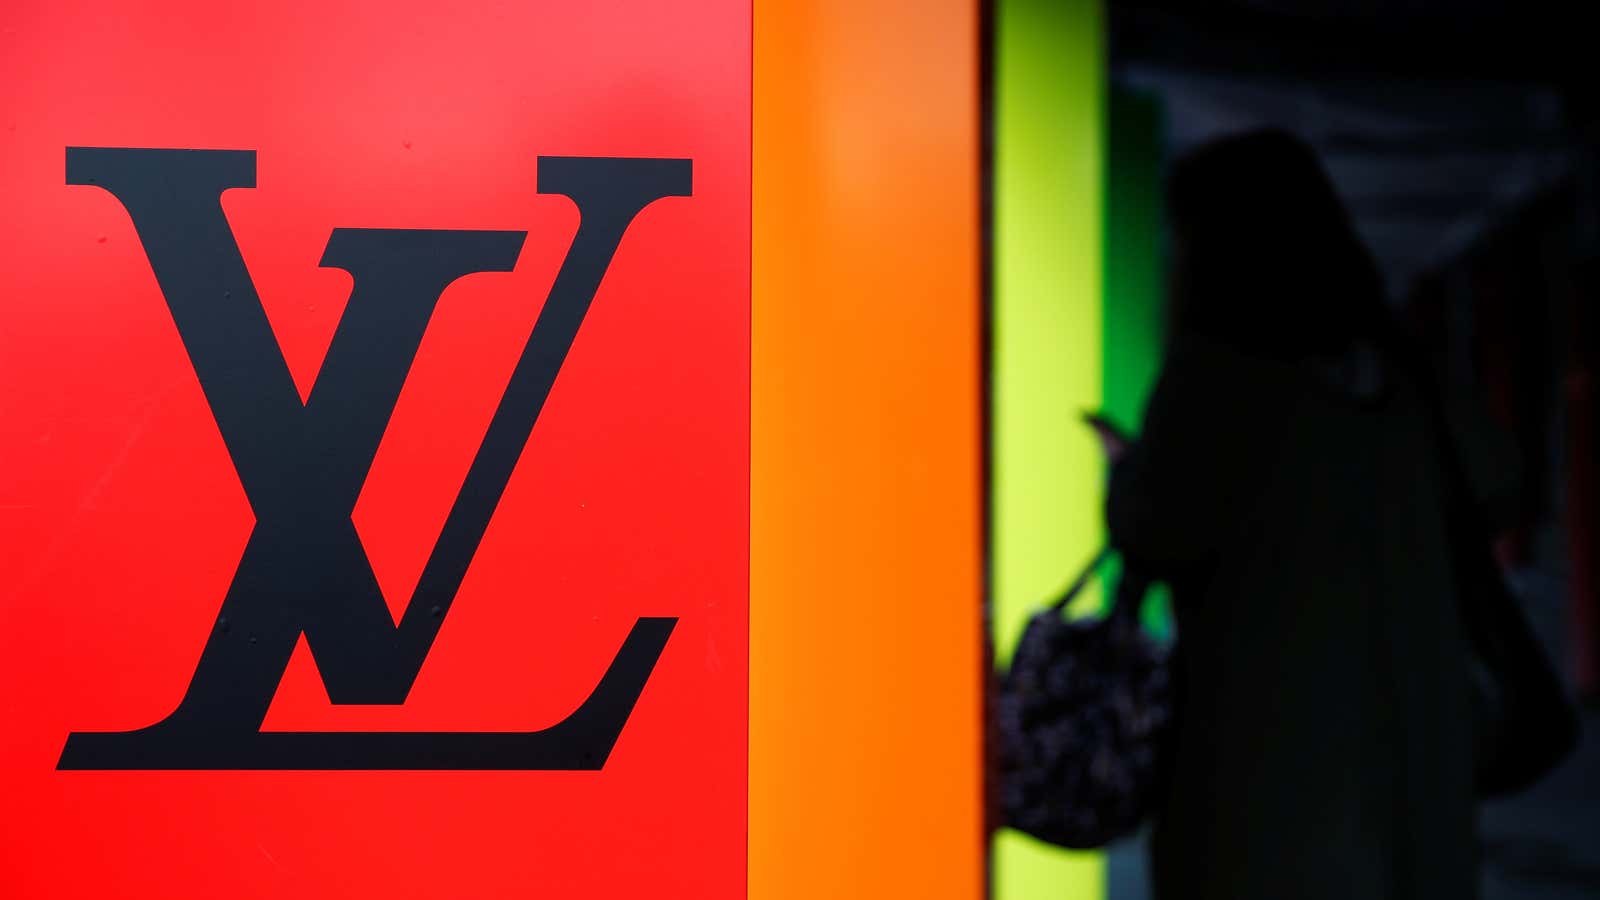 Why did Louis Vuitton make a video game?